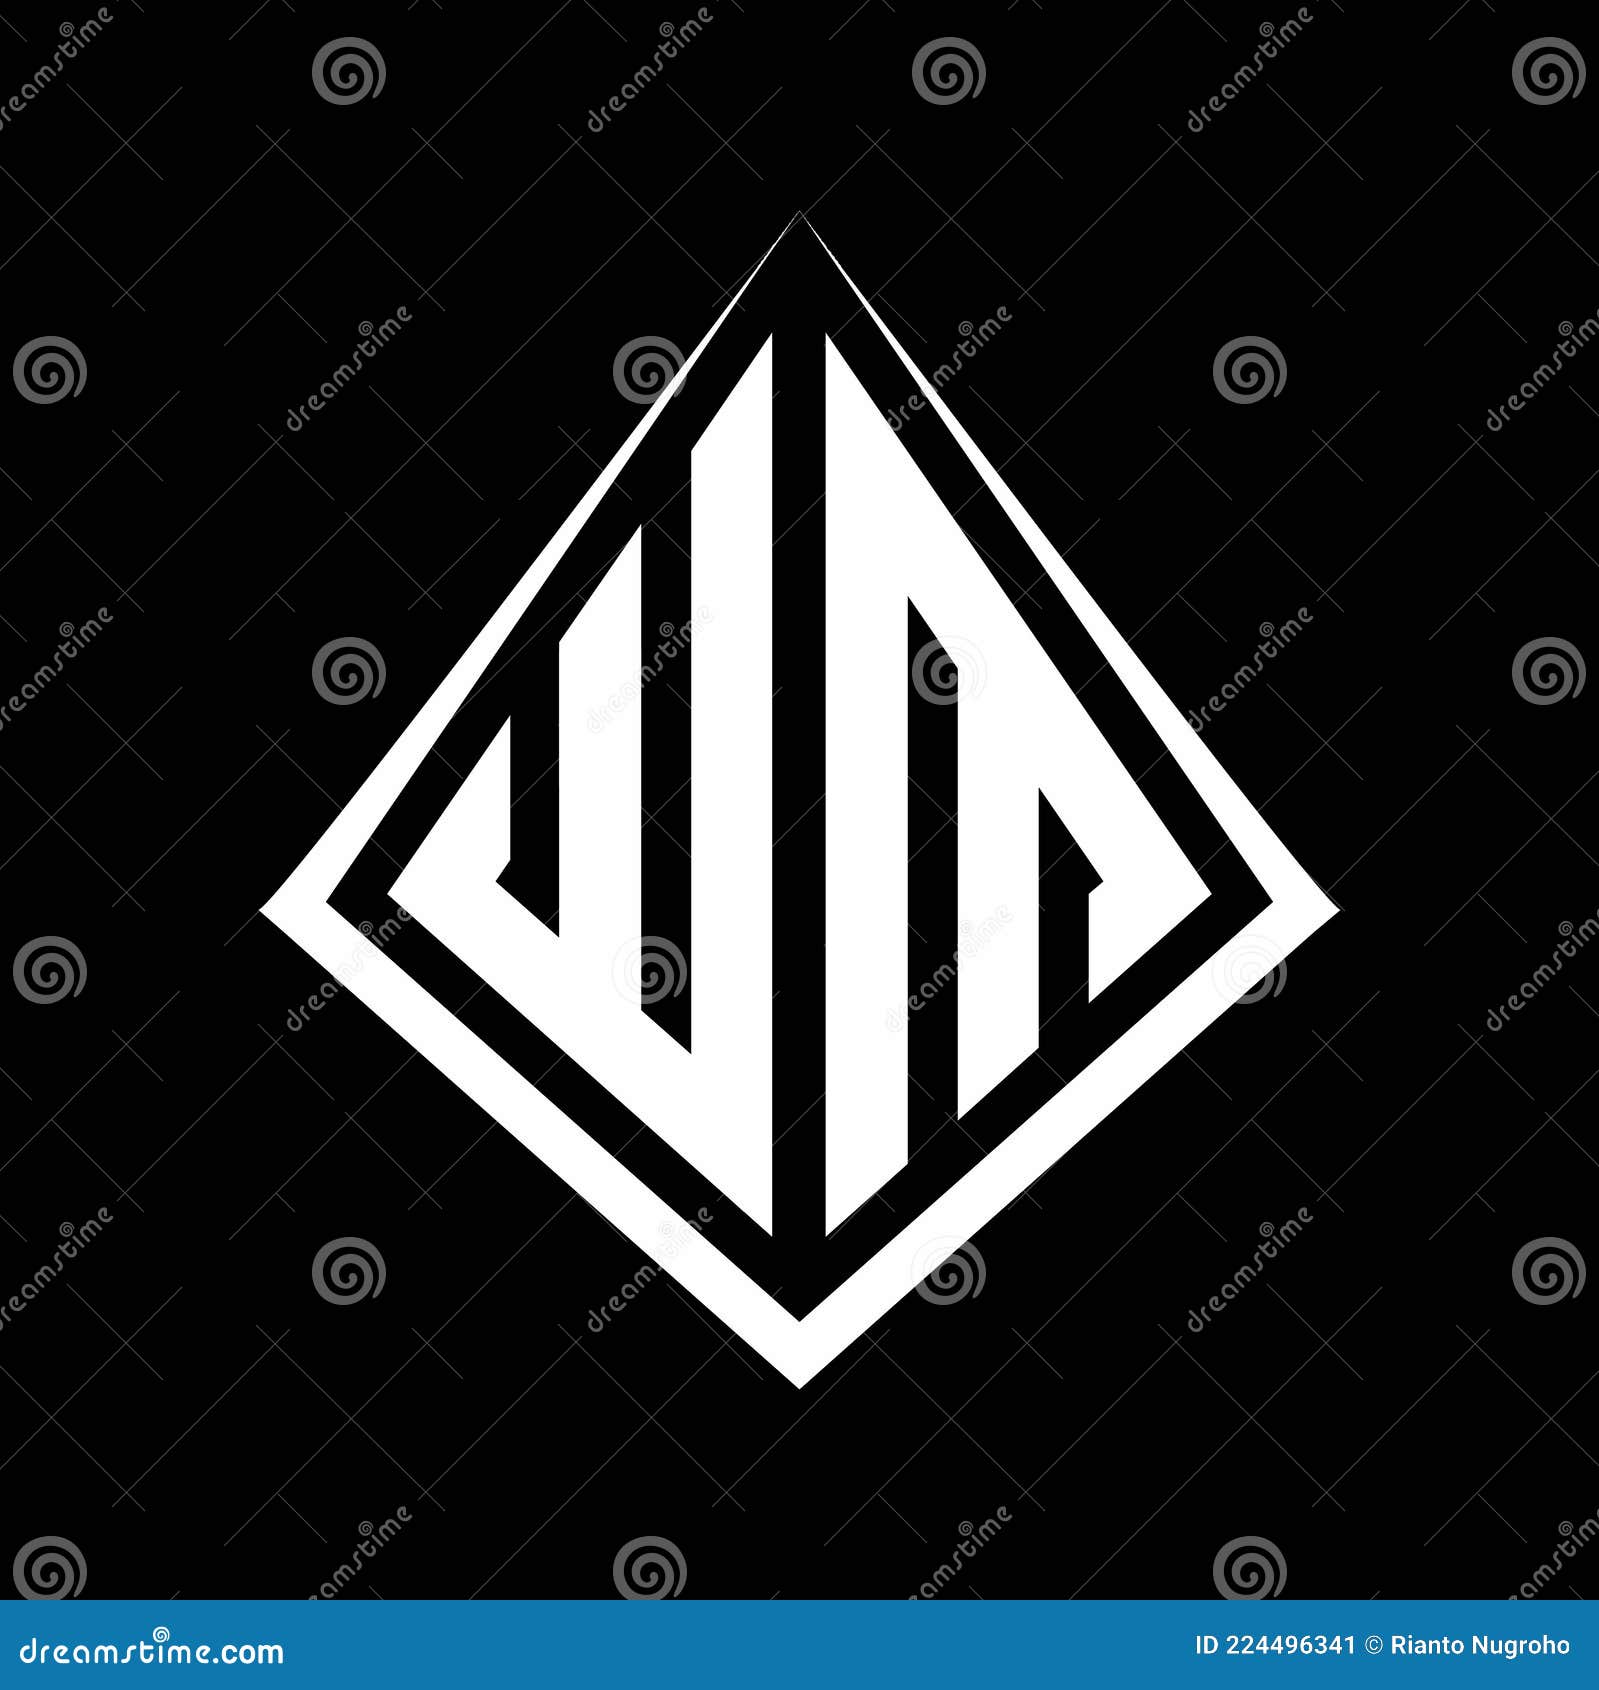 wm logo letters monogram with prisma   template